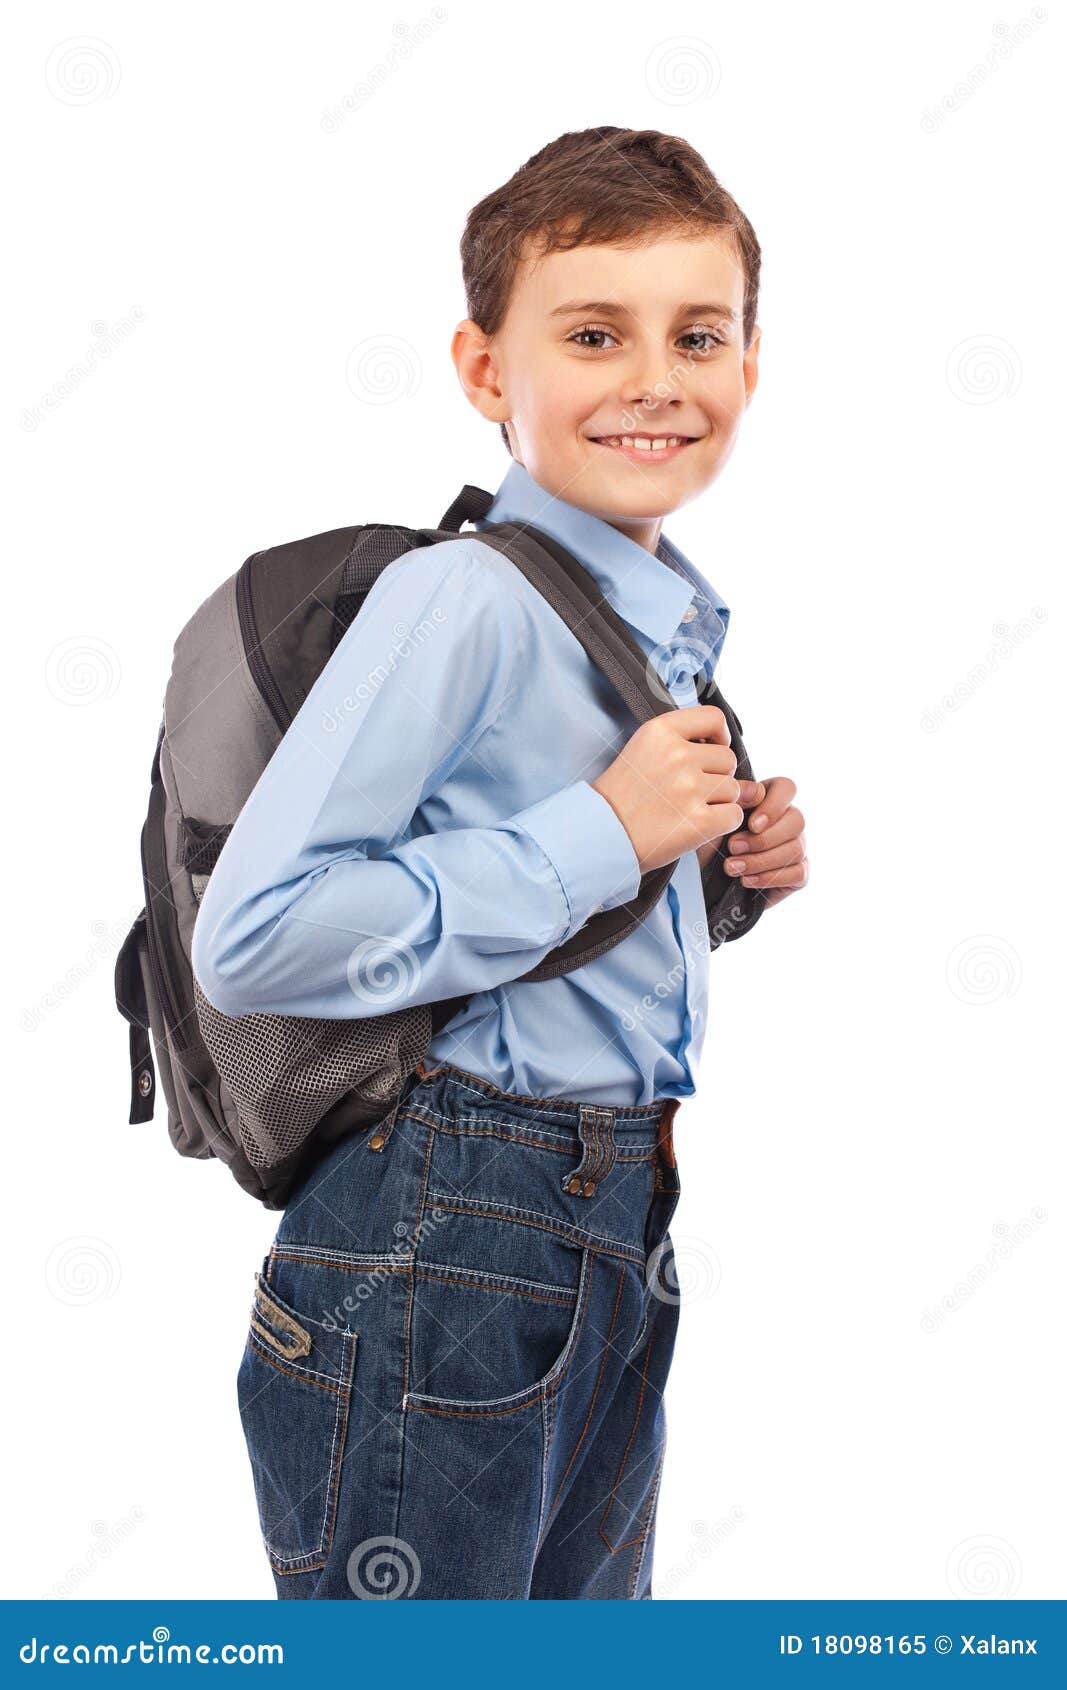 kid holding backpack